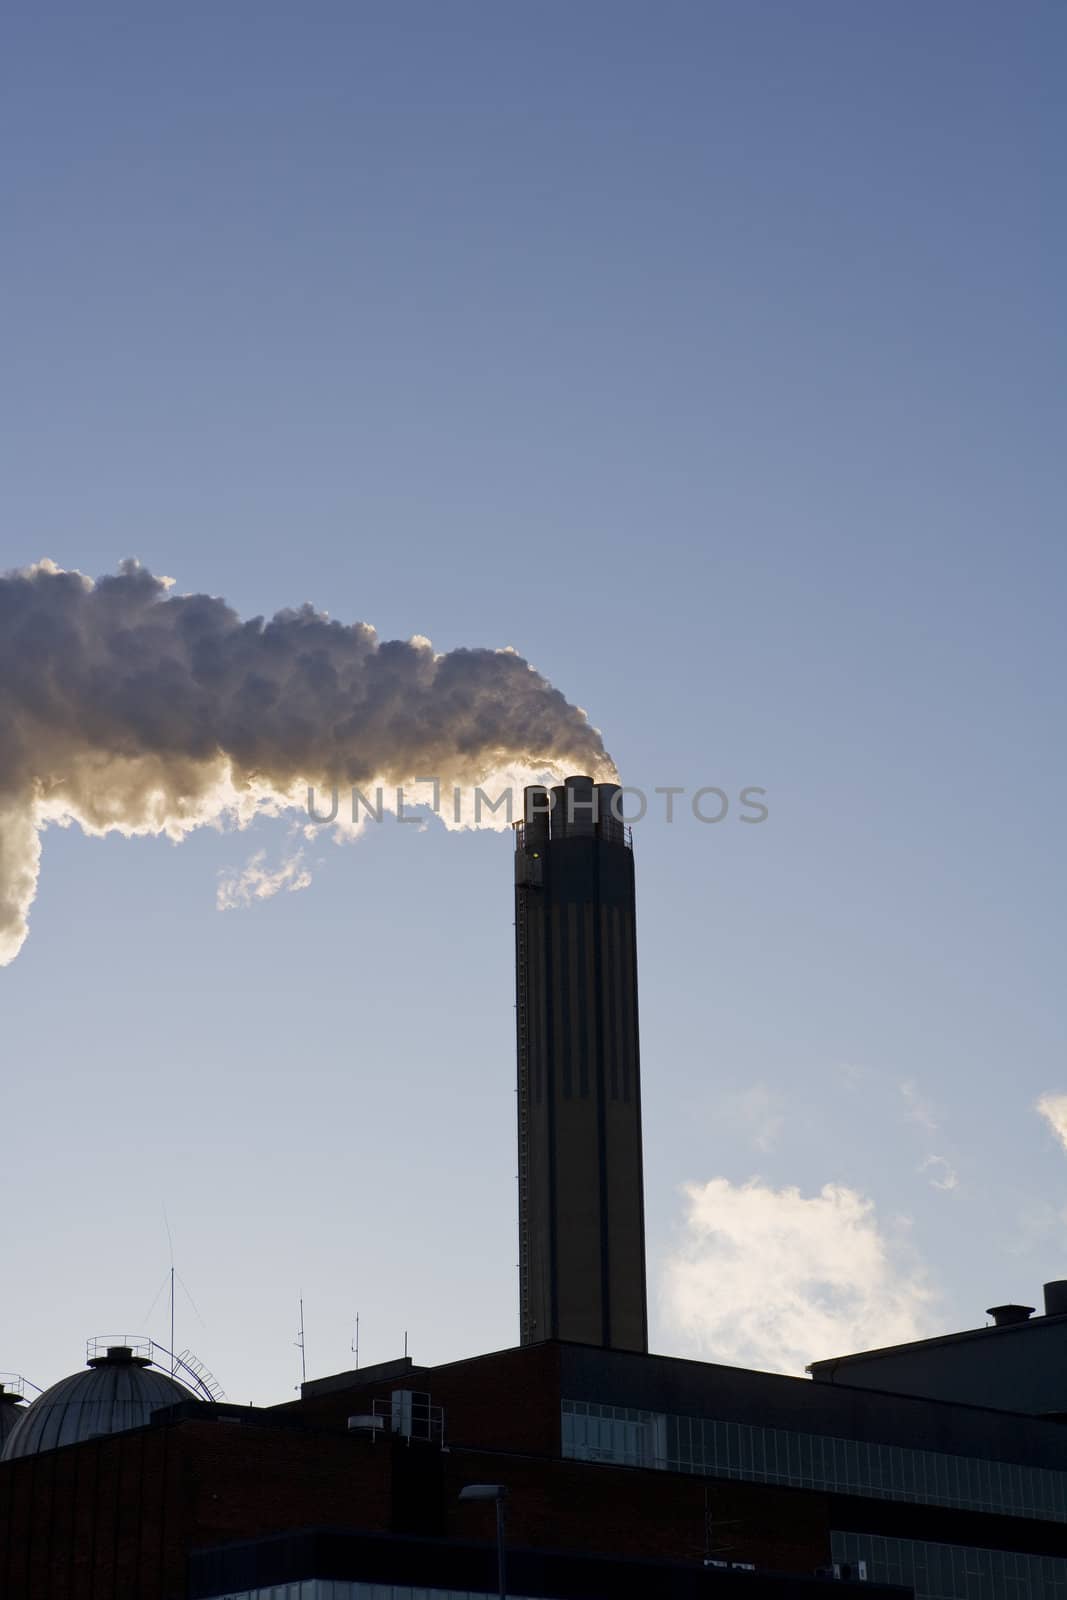 Smoking chimney against a blue sky